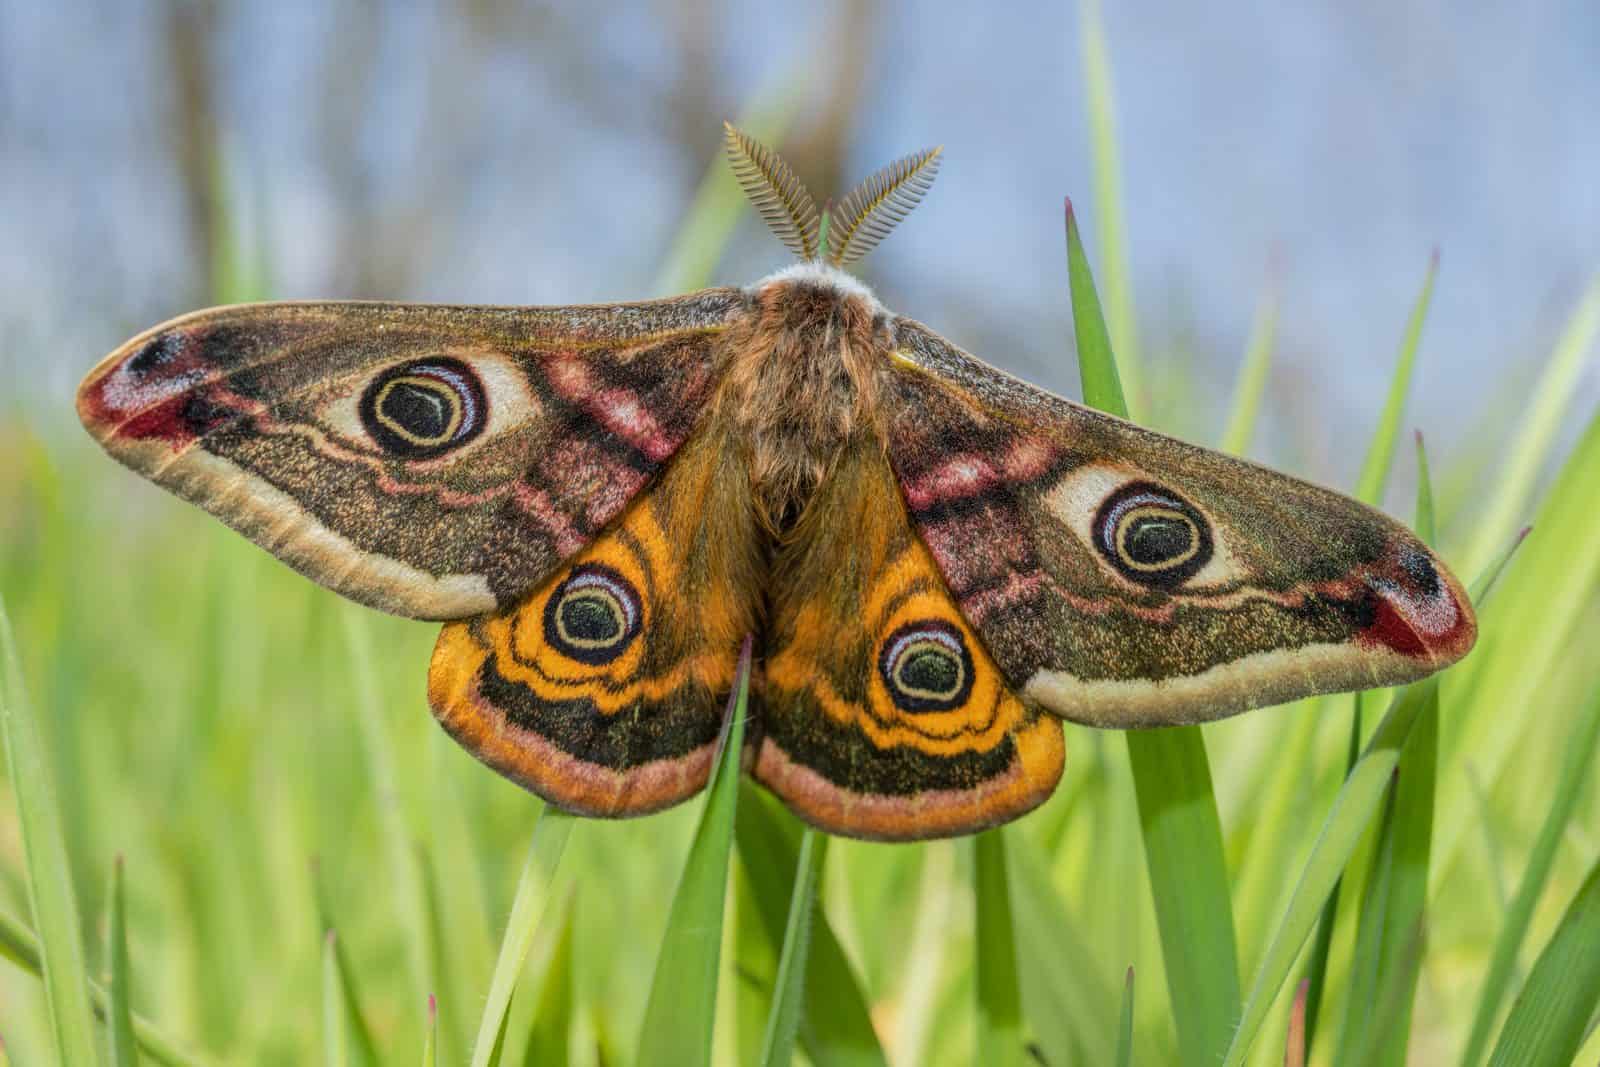 Male Emperor Moth on grass